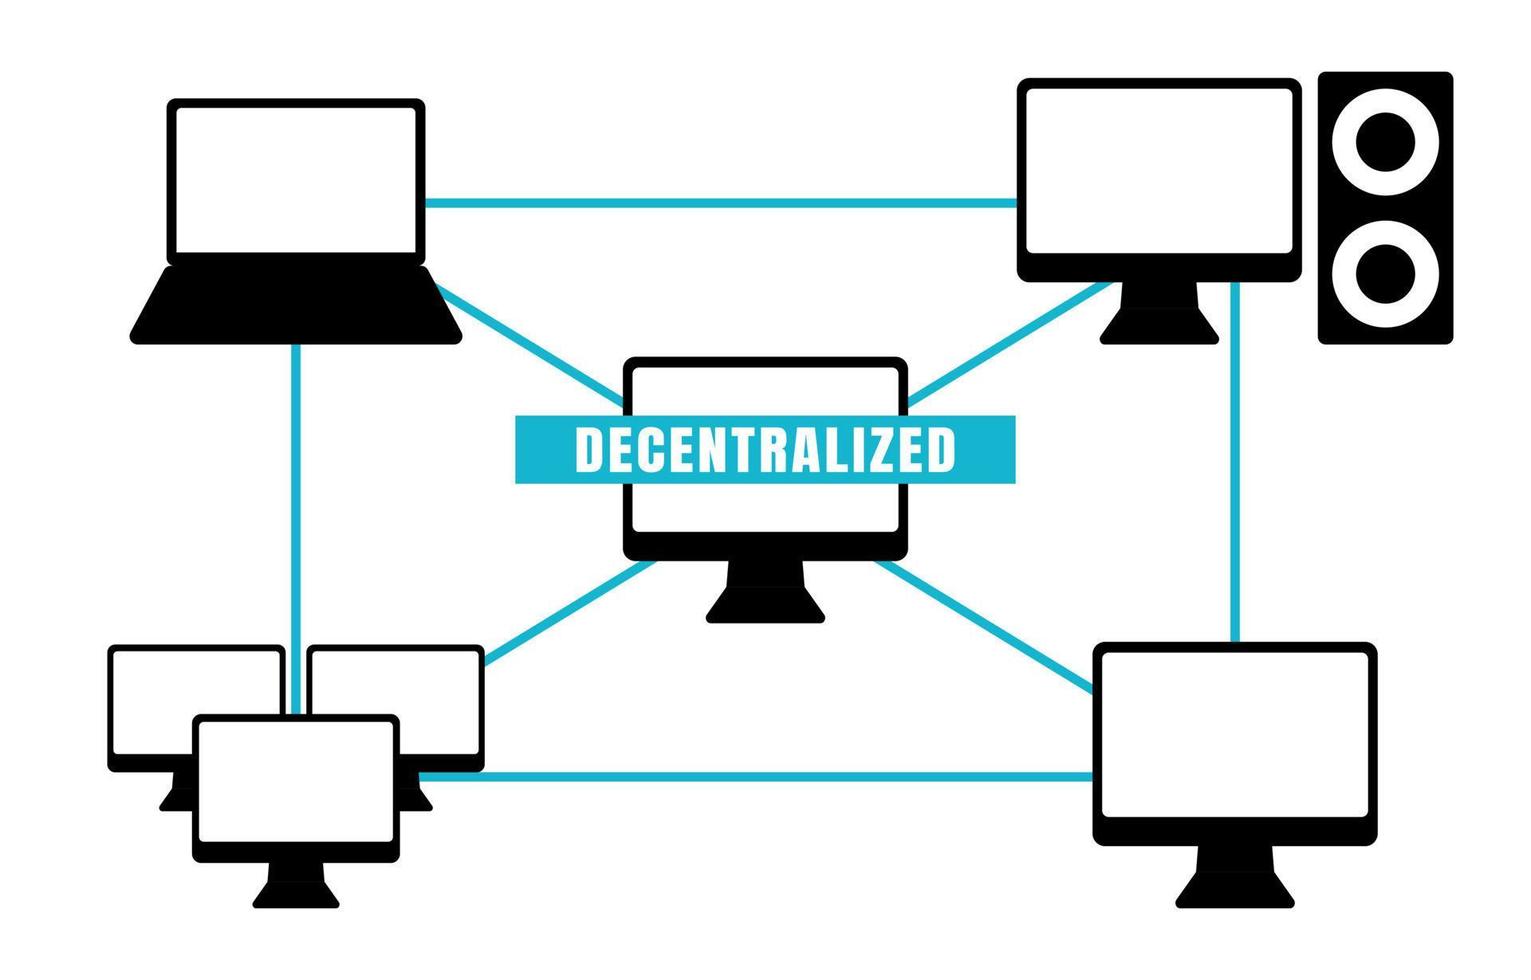 transacción de ilustración de finanzas descentralizadas de defi. transacción futura en blockchain vector